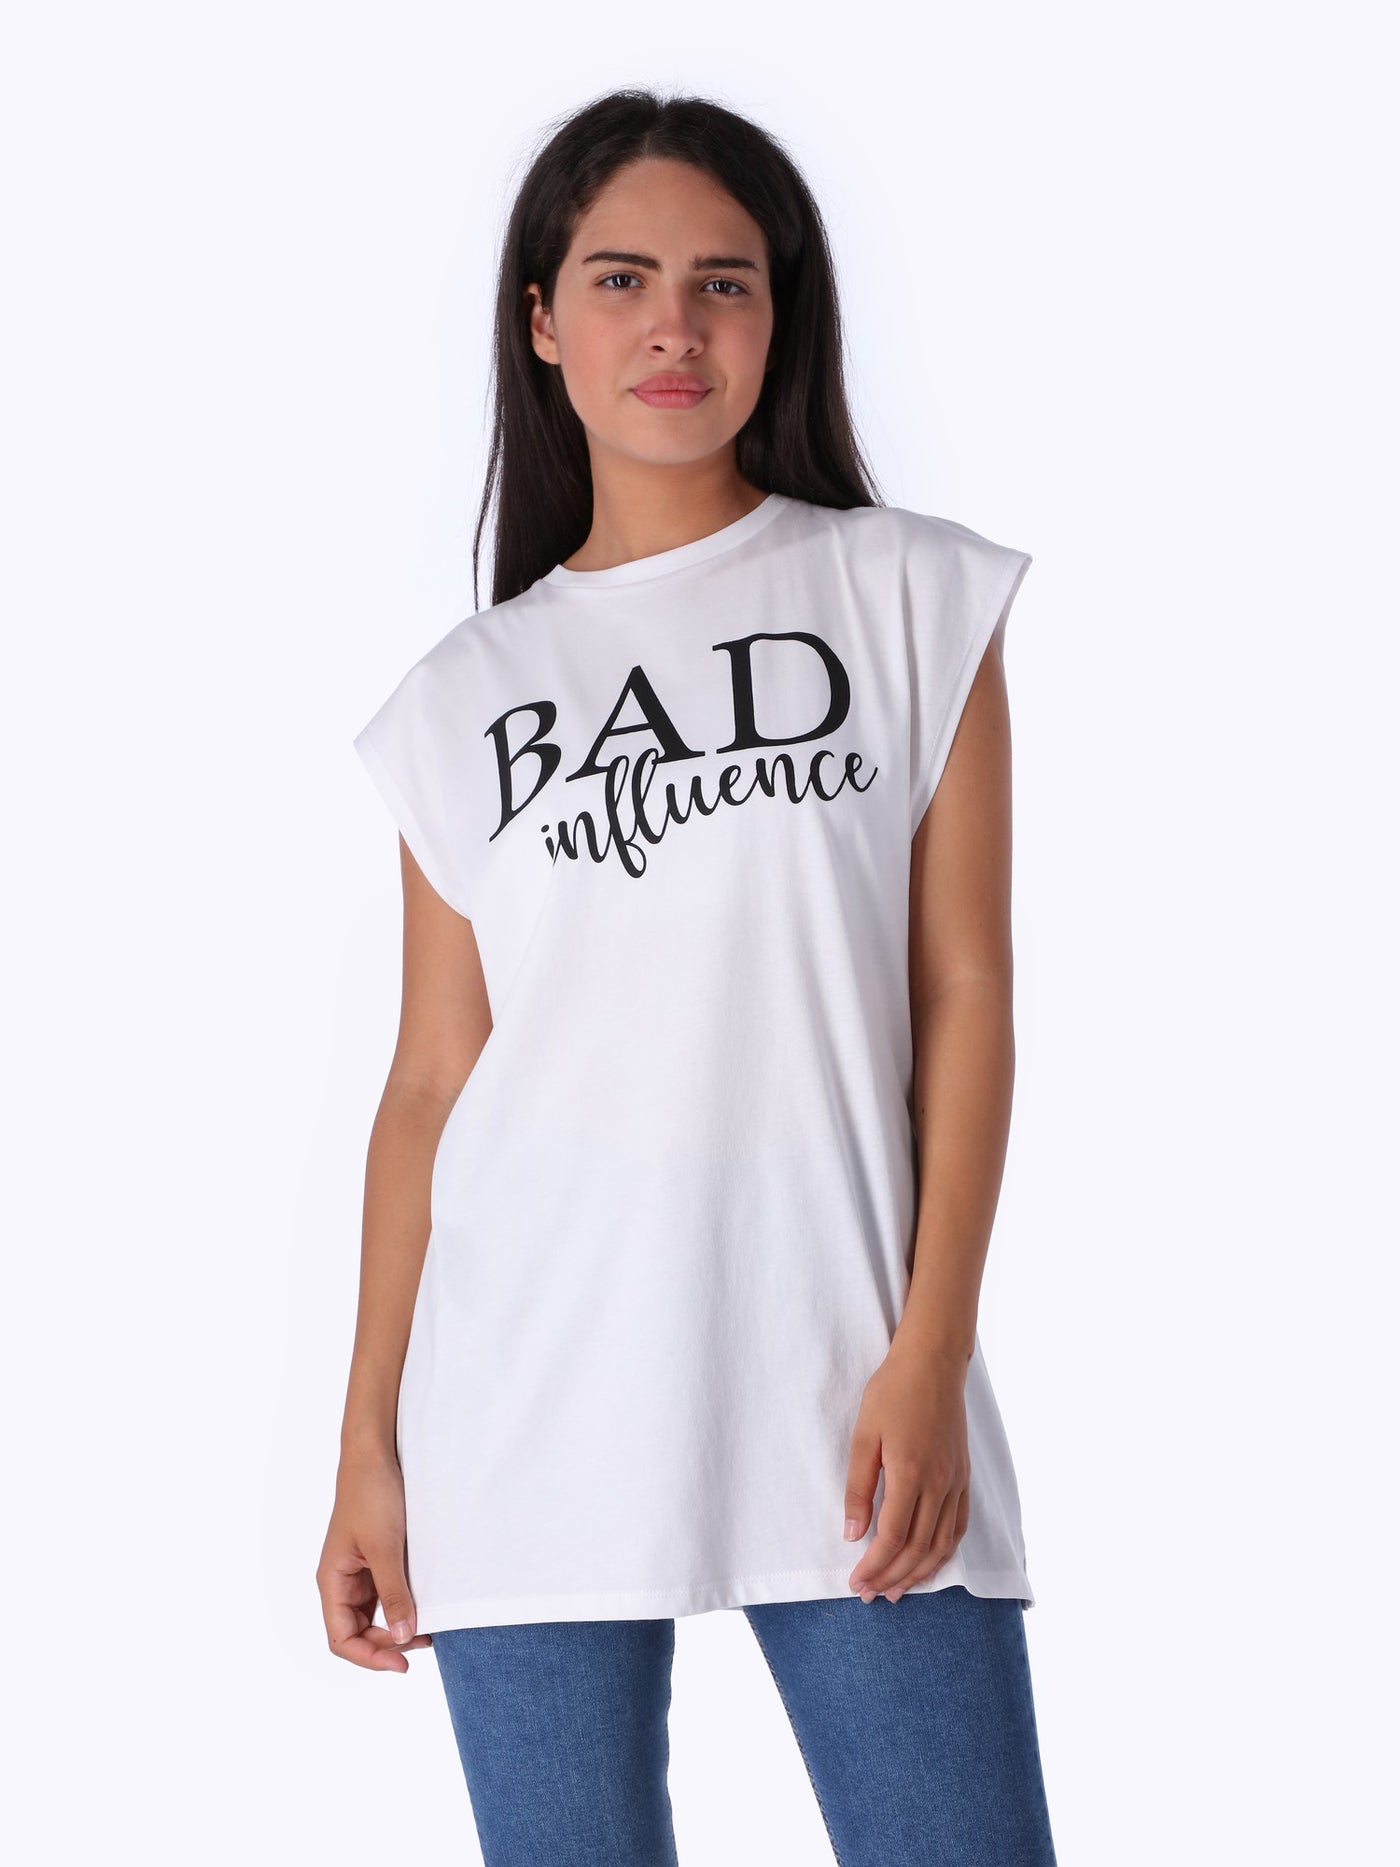 OR Women's Cap Sleeve Printed T-Shirt